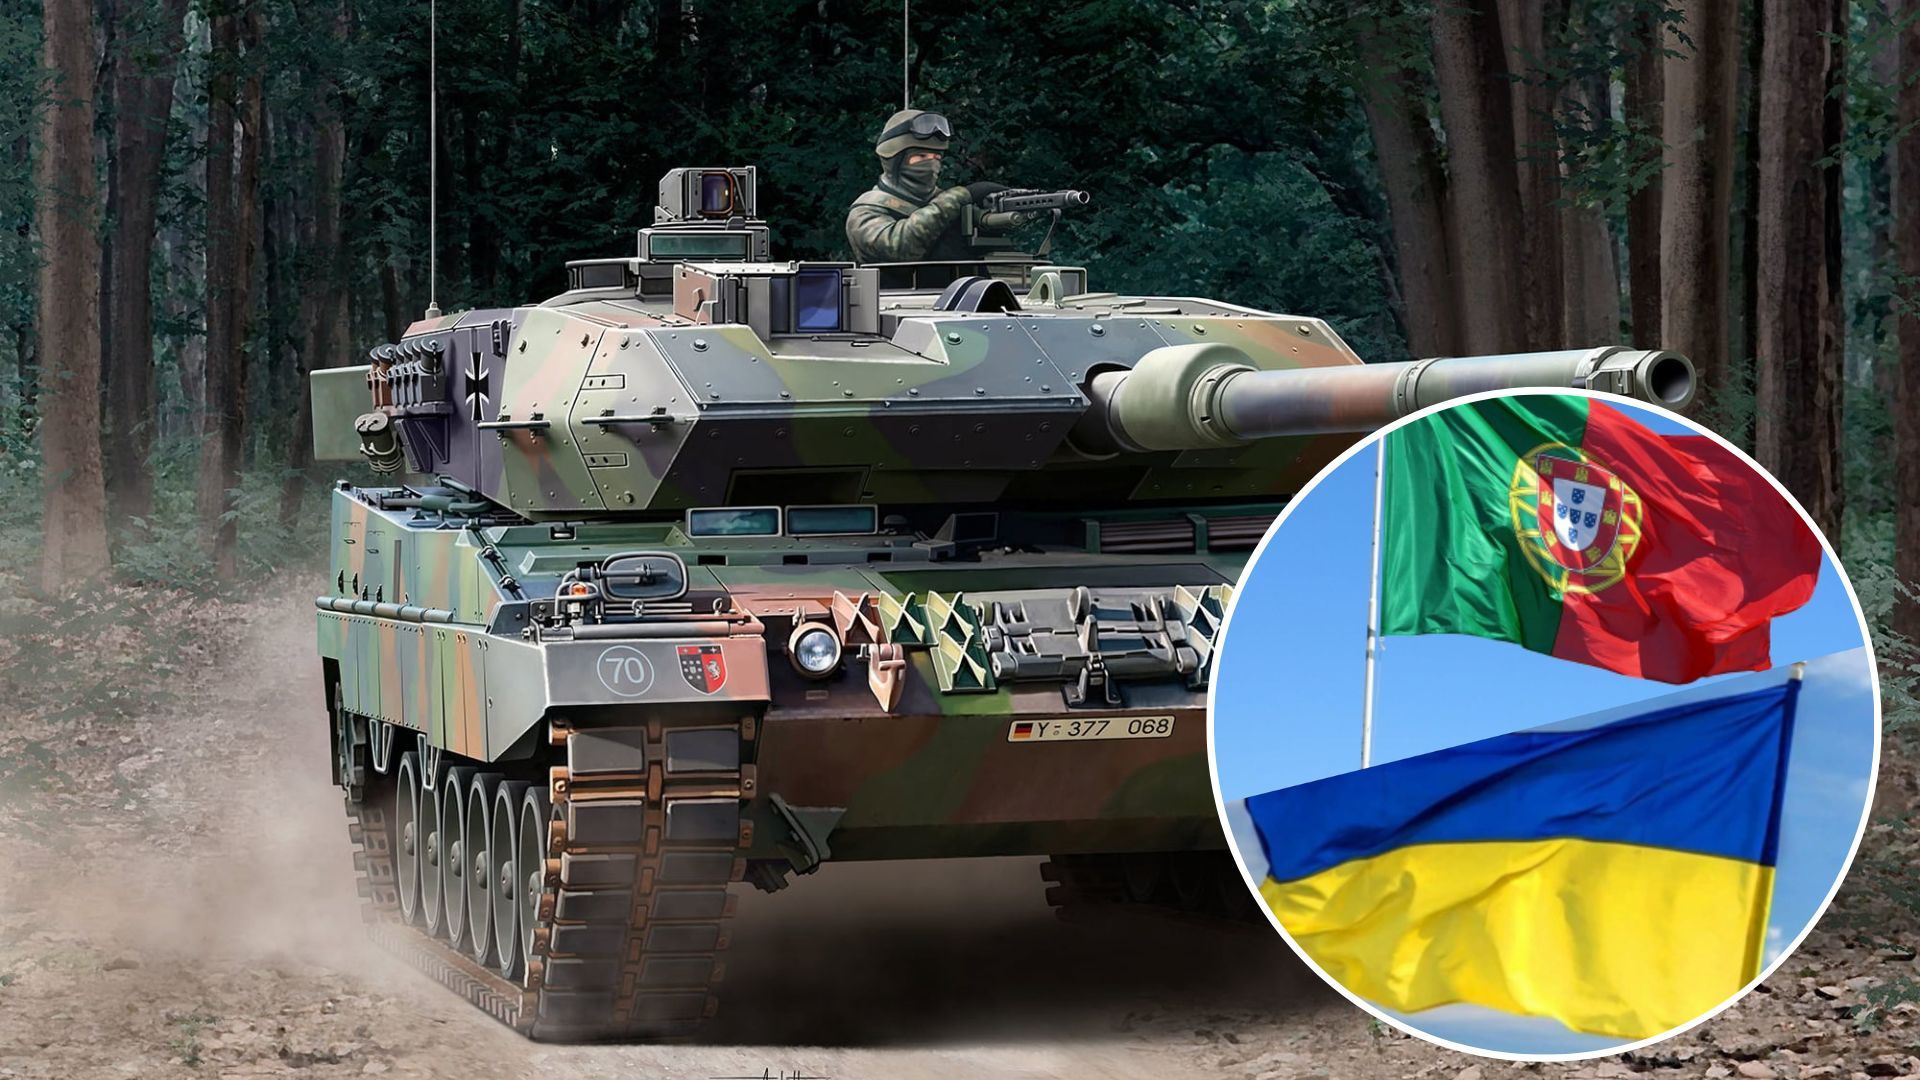 Leopard 2 для Украины - Португалия передала три танка - 24 Канал